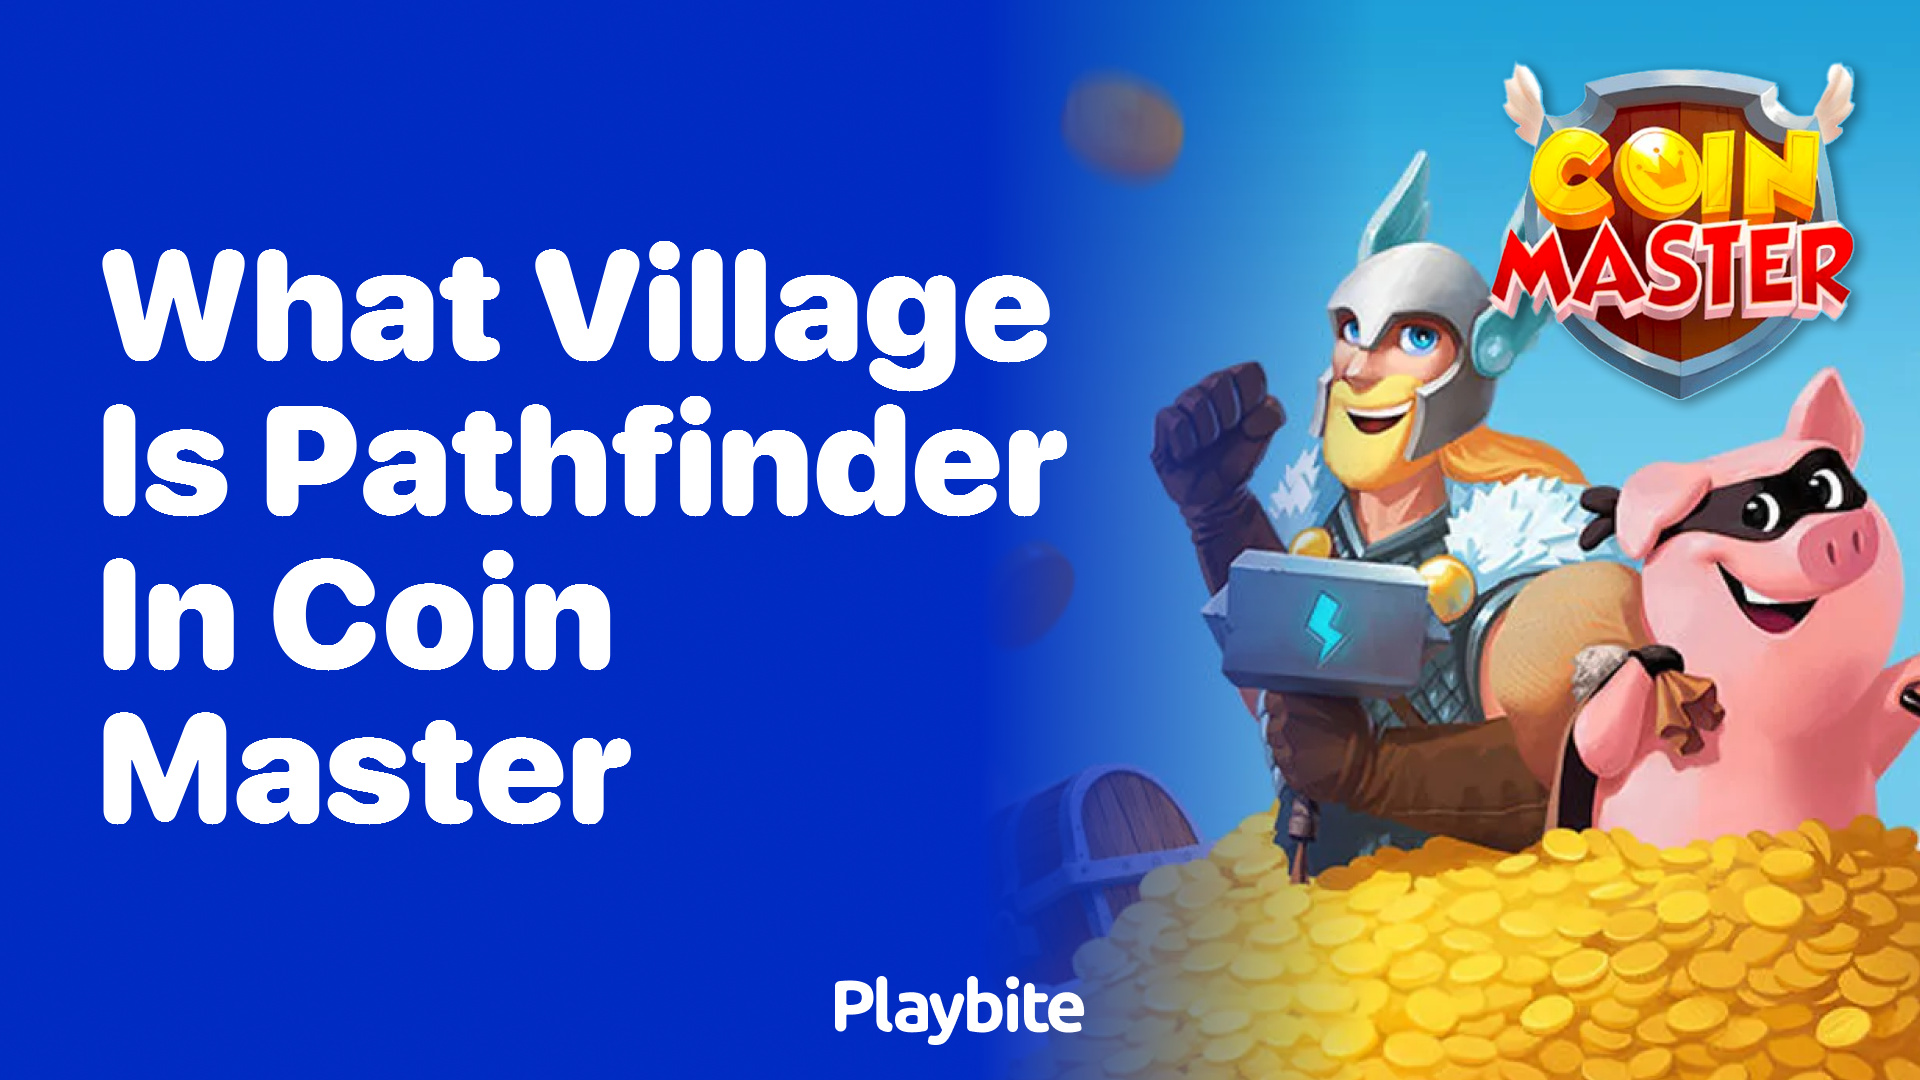 What Village Is Pathfinder in Coin Master?